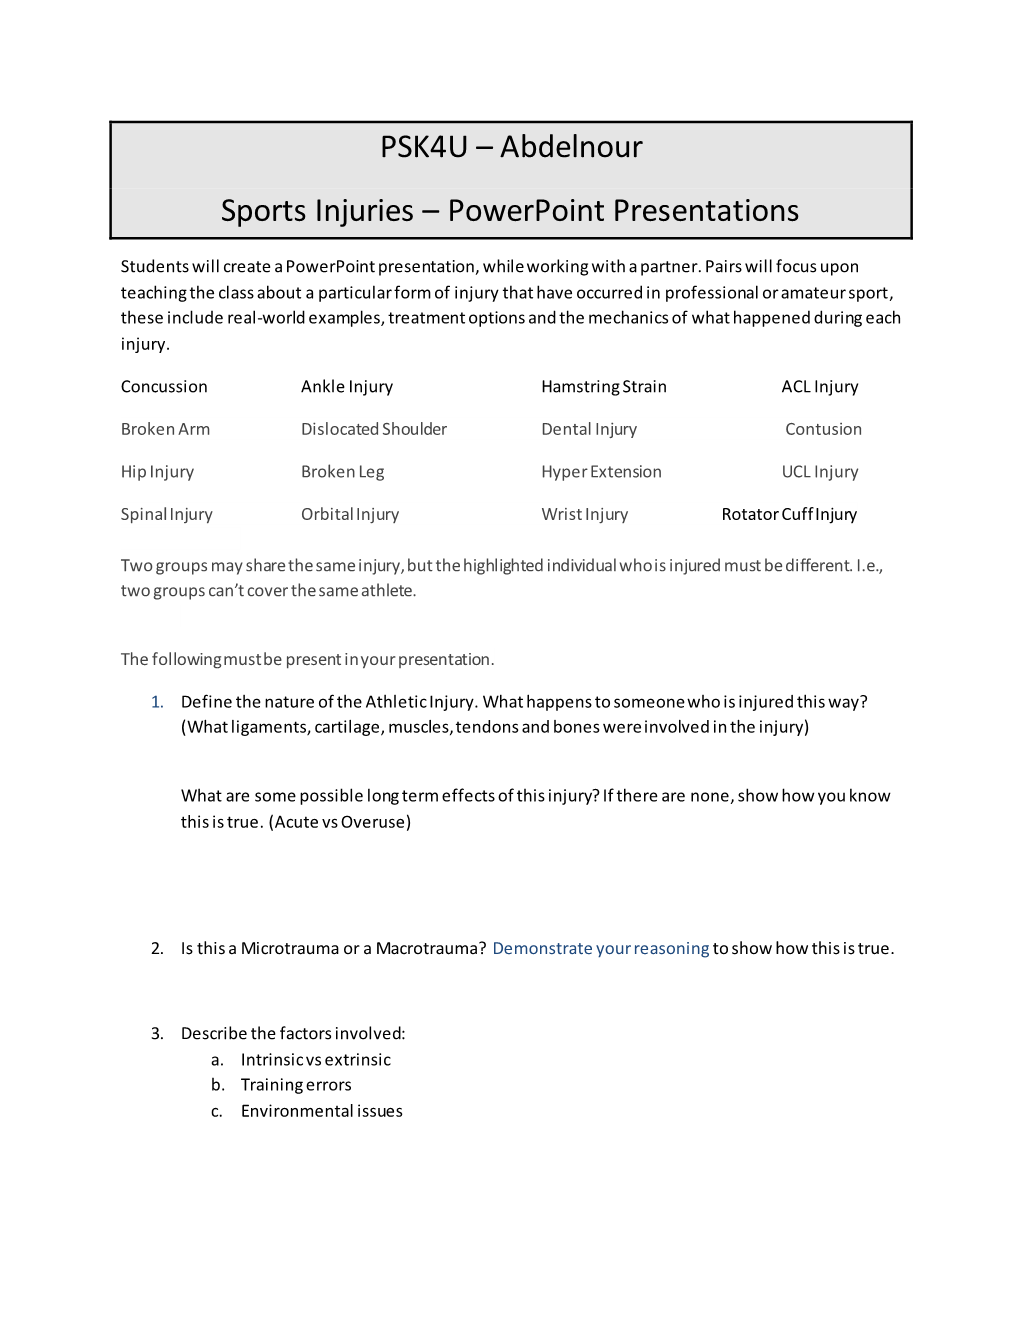 PSK4U – Abdelnour Sports Injuries – Powerpoint Presentations